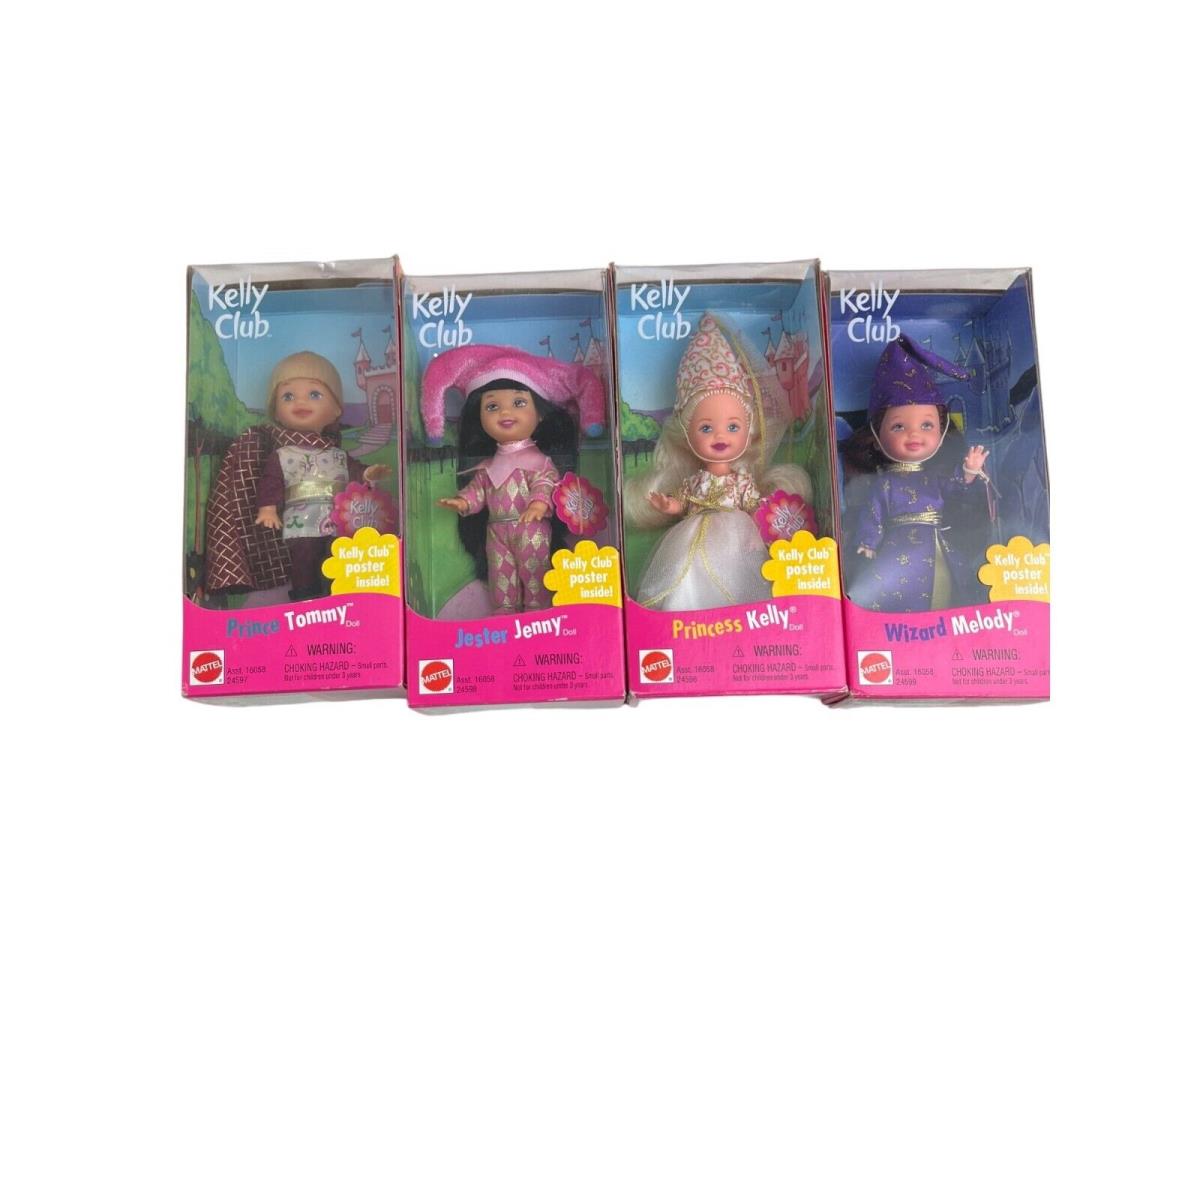 Barbie Kelly Club Dolls 1999 Mattel Prince Tommy Jester Jenny Princess Wizard